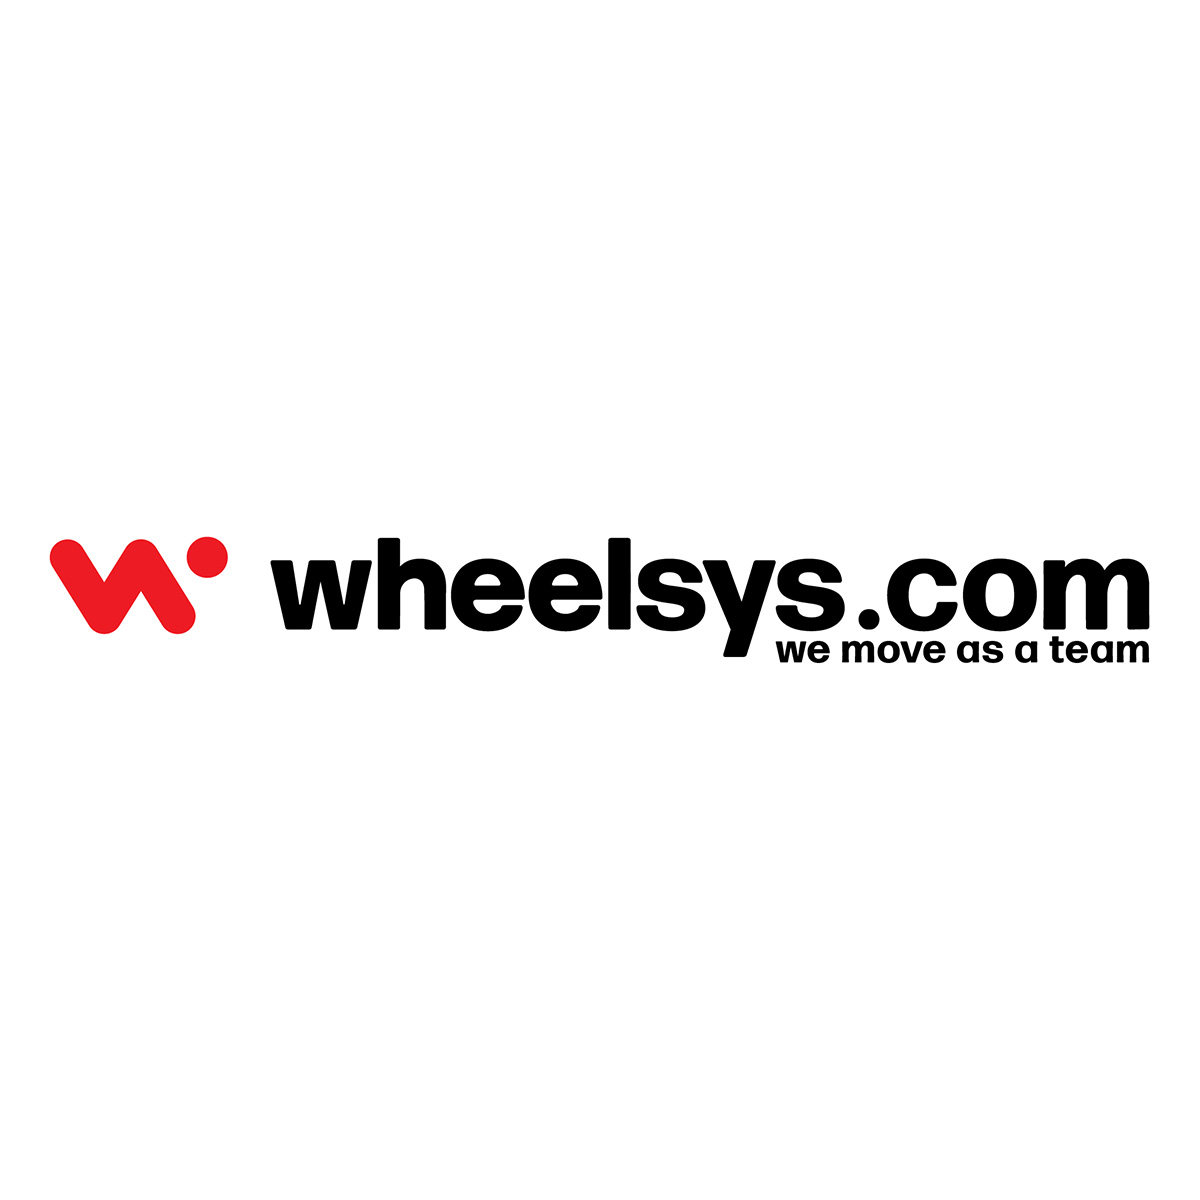 (c) Wheelsys.com